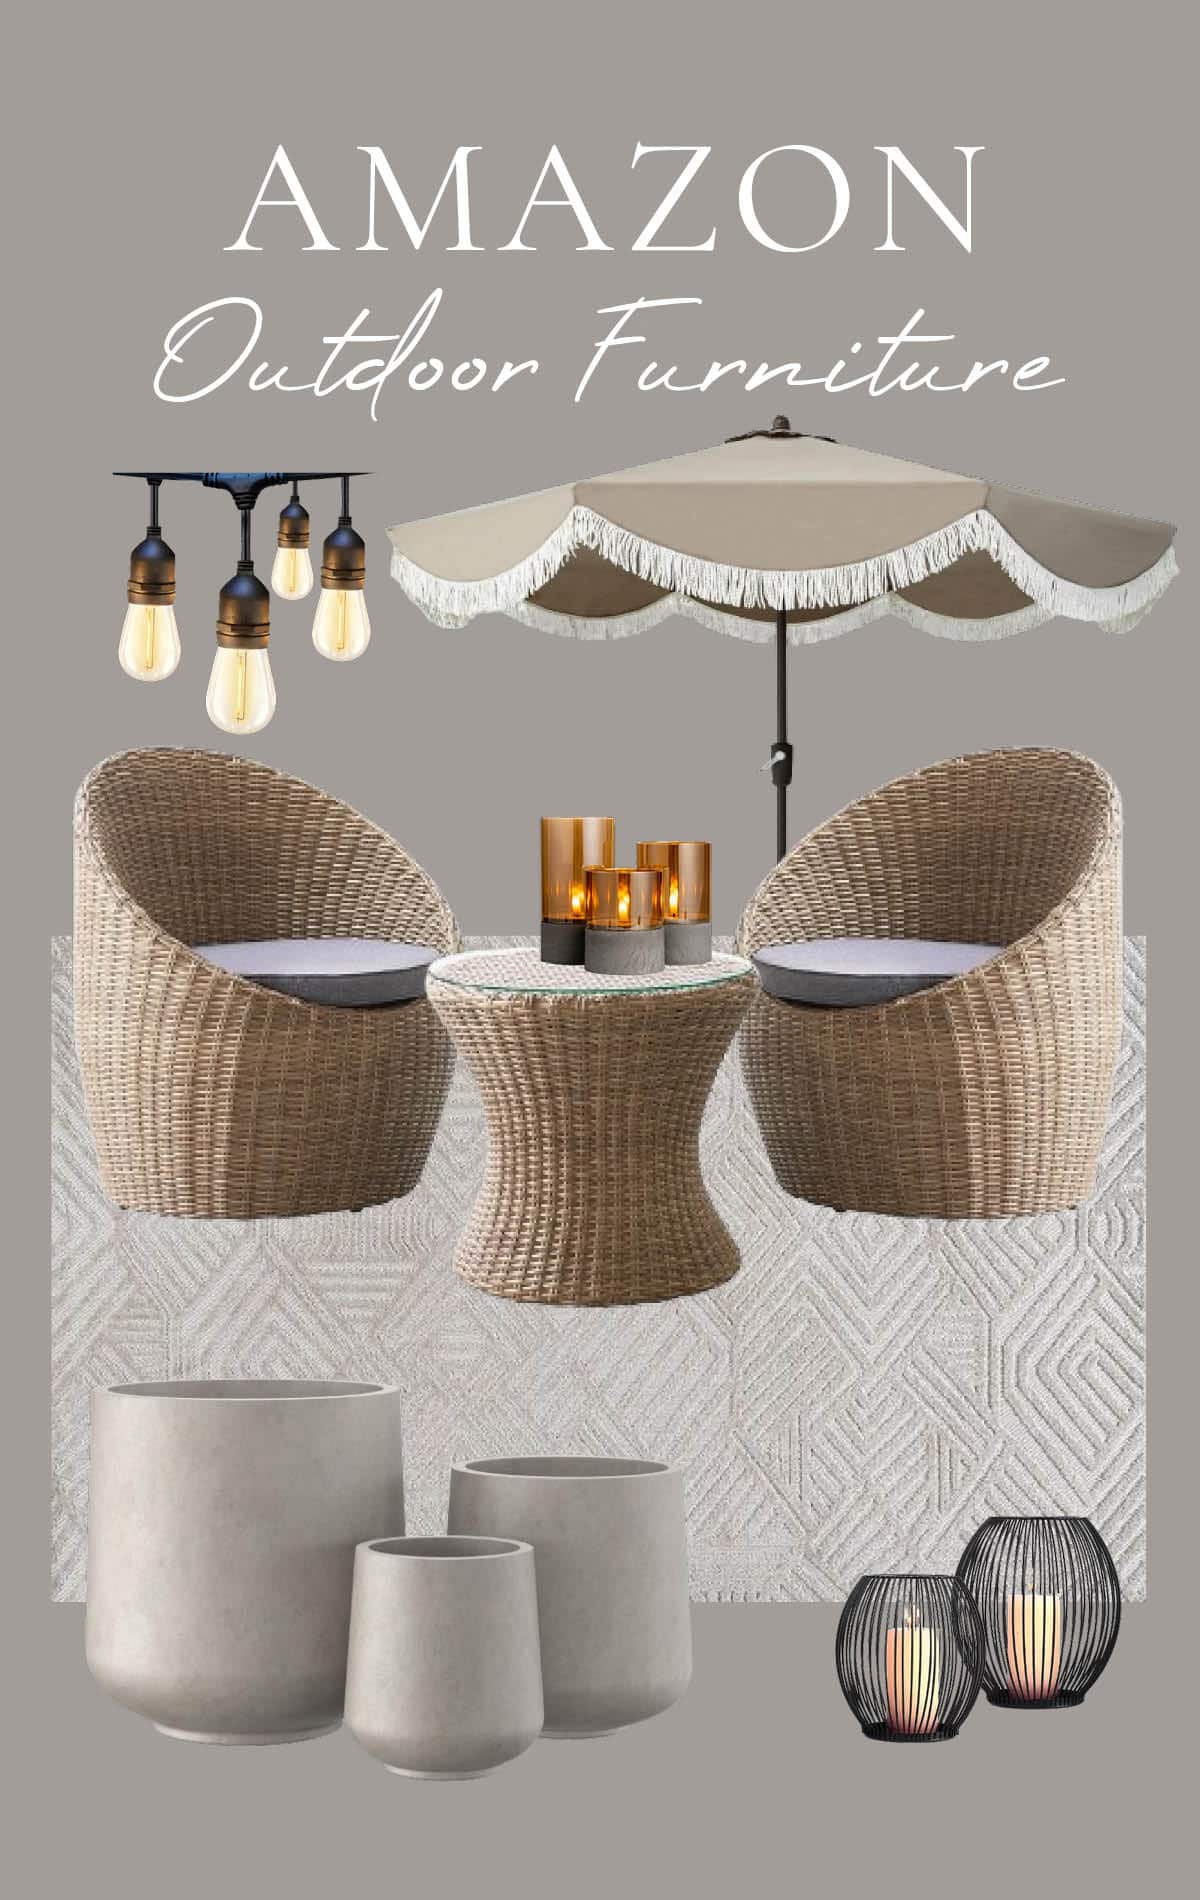 Amazon outdoor furniture modern patio mood board interior design